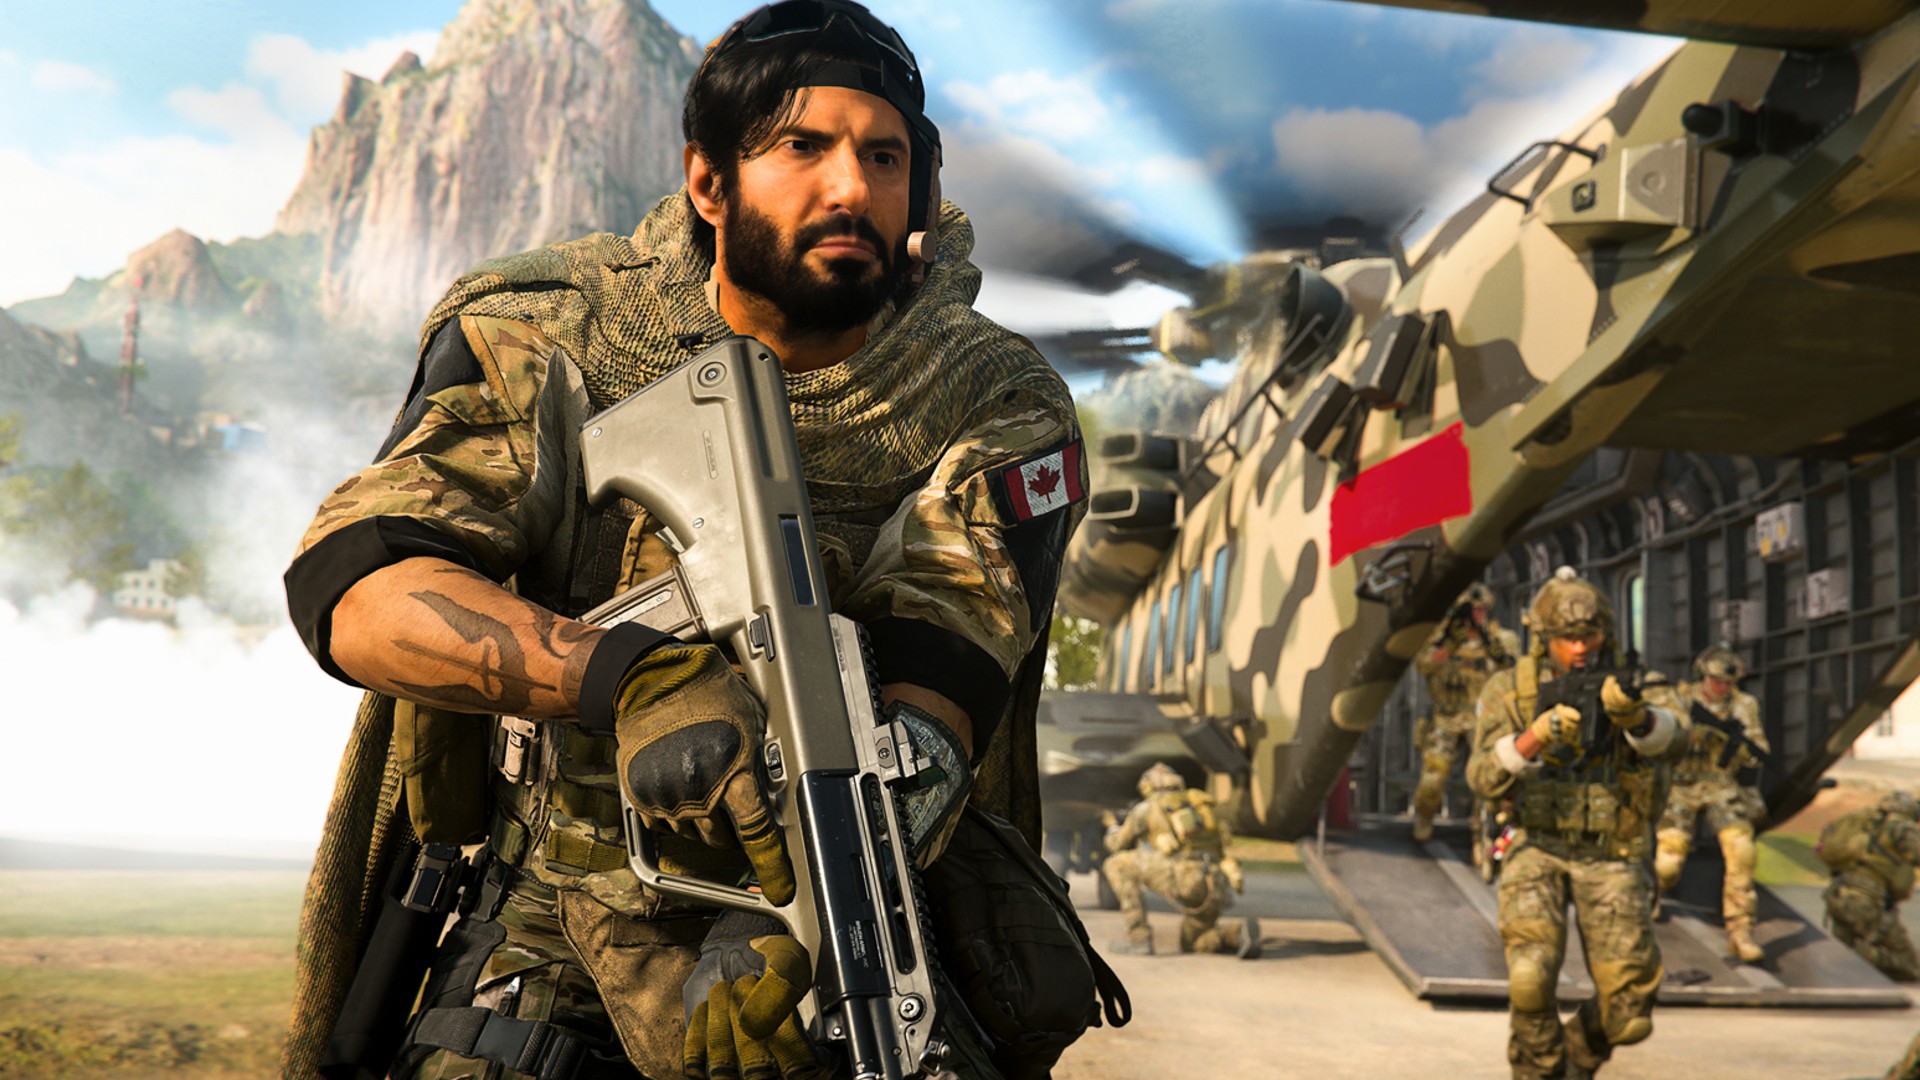 Should You Buy Call of Duty Modern Warfare 2? (Review) 